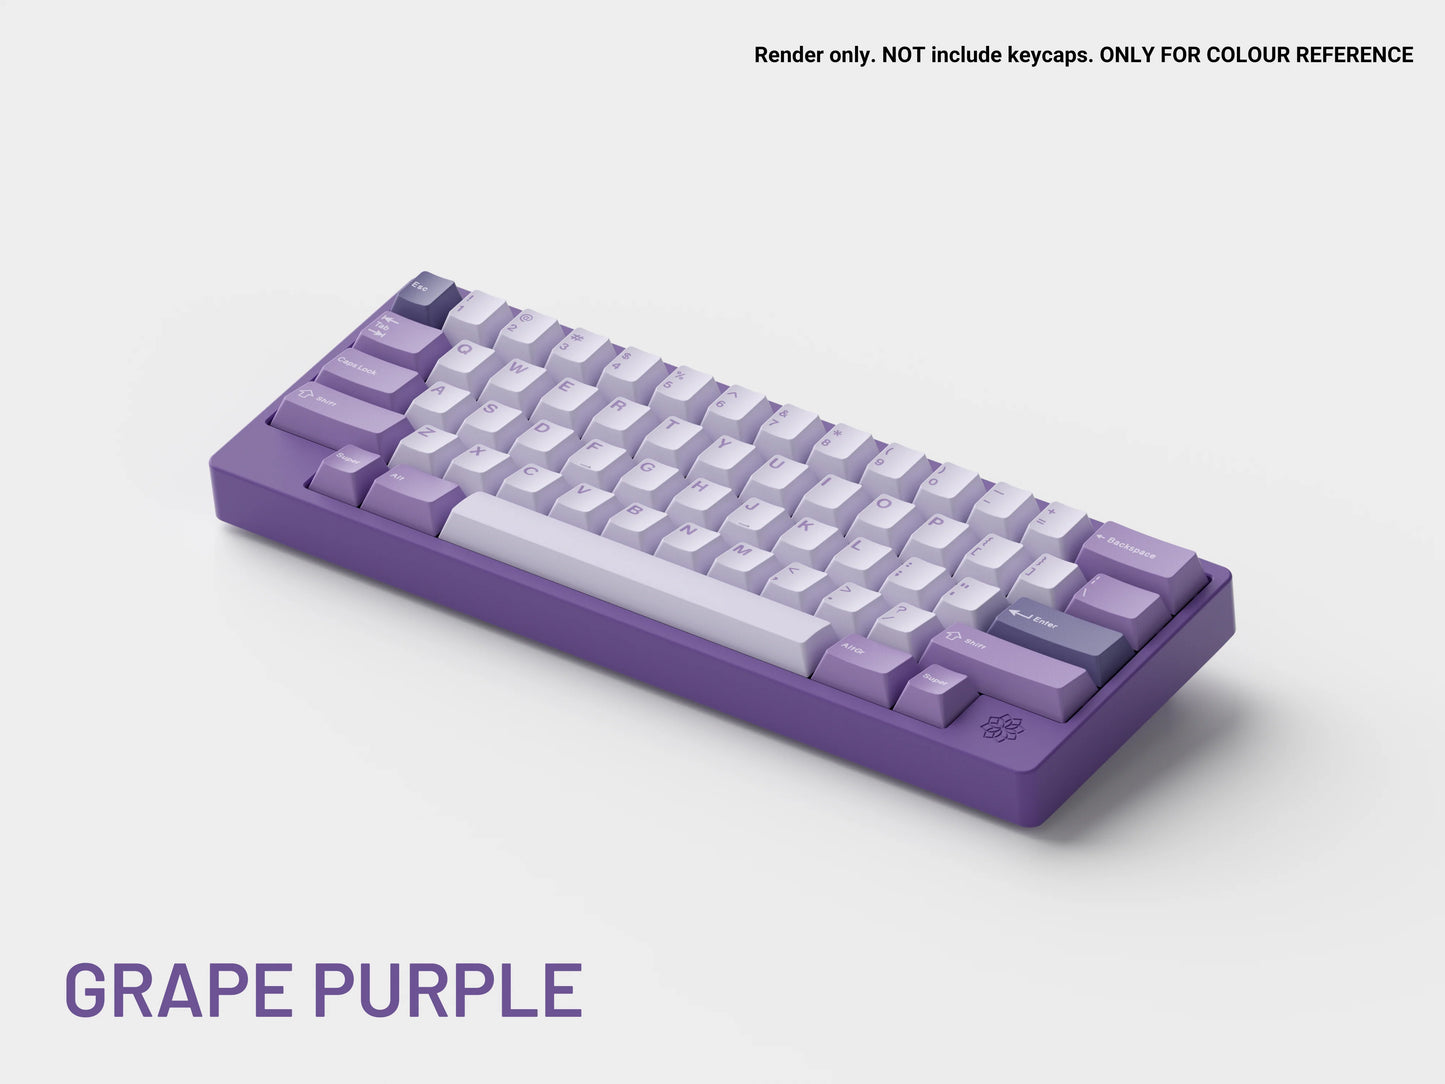 Molly60 - 60% Keyboard Kit